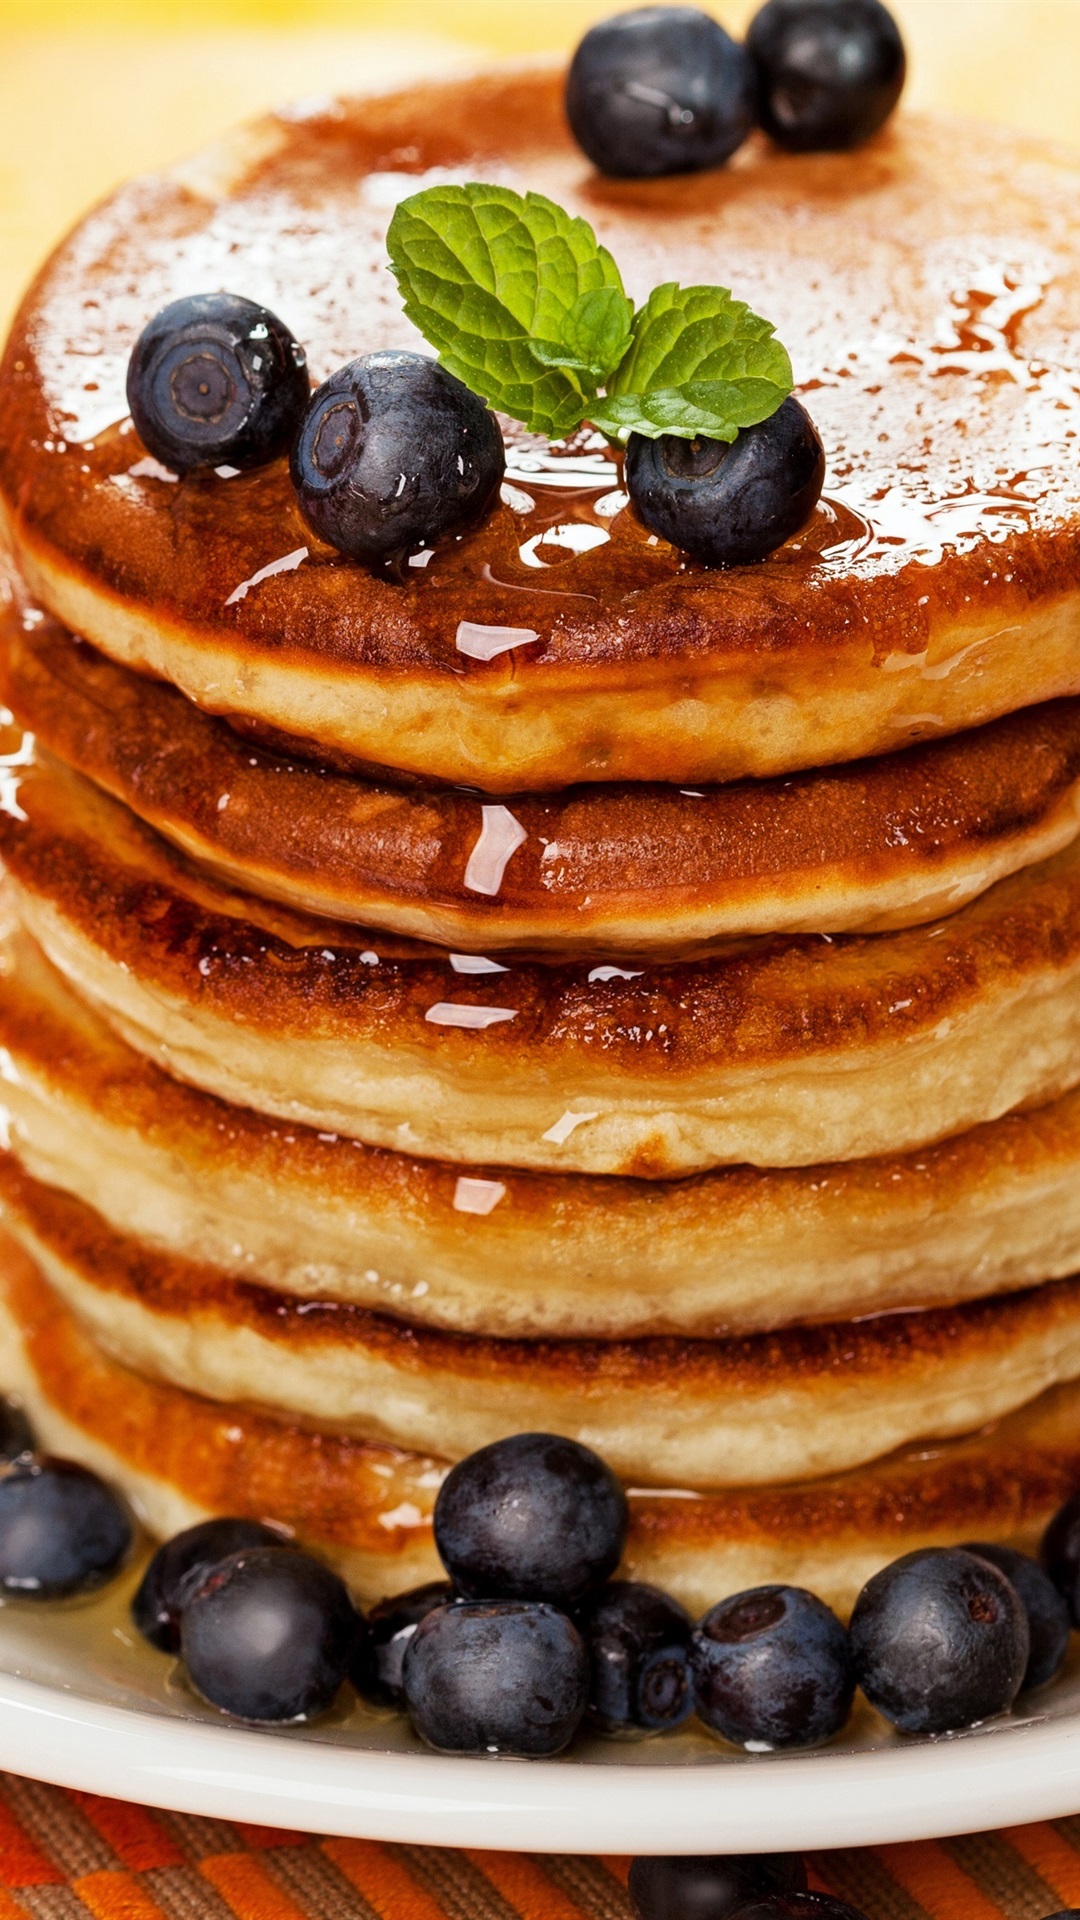 Wallpaper ID 284471  pancakes for breakfast 4k wallpaper free download